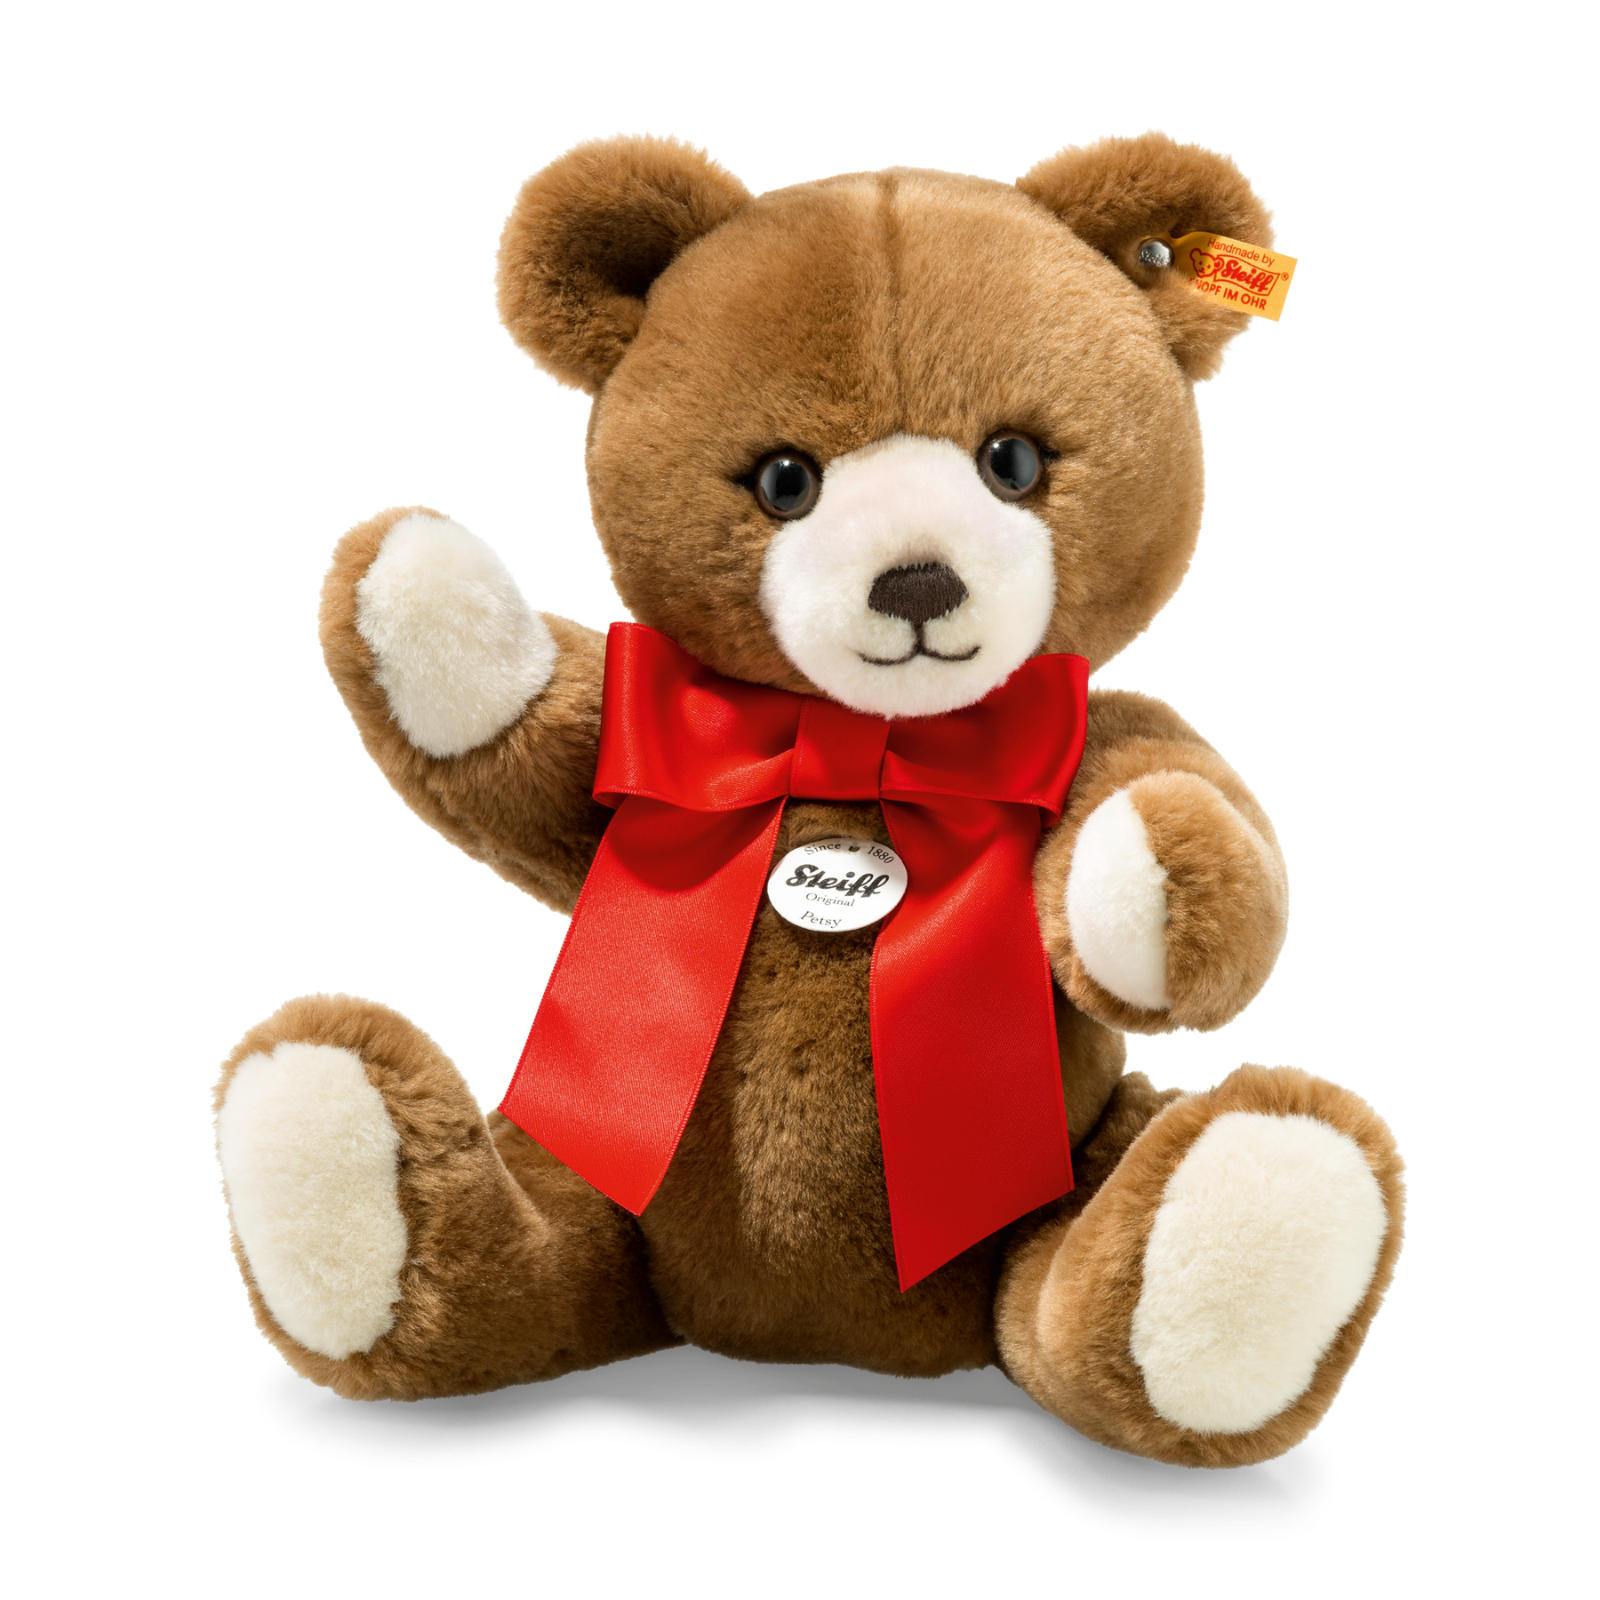 STEIFF Teddybär Petsy 28 cm caramel 012402  - für Kinder und Sammler